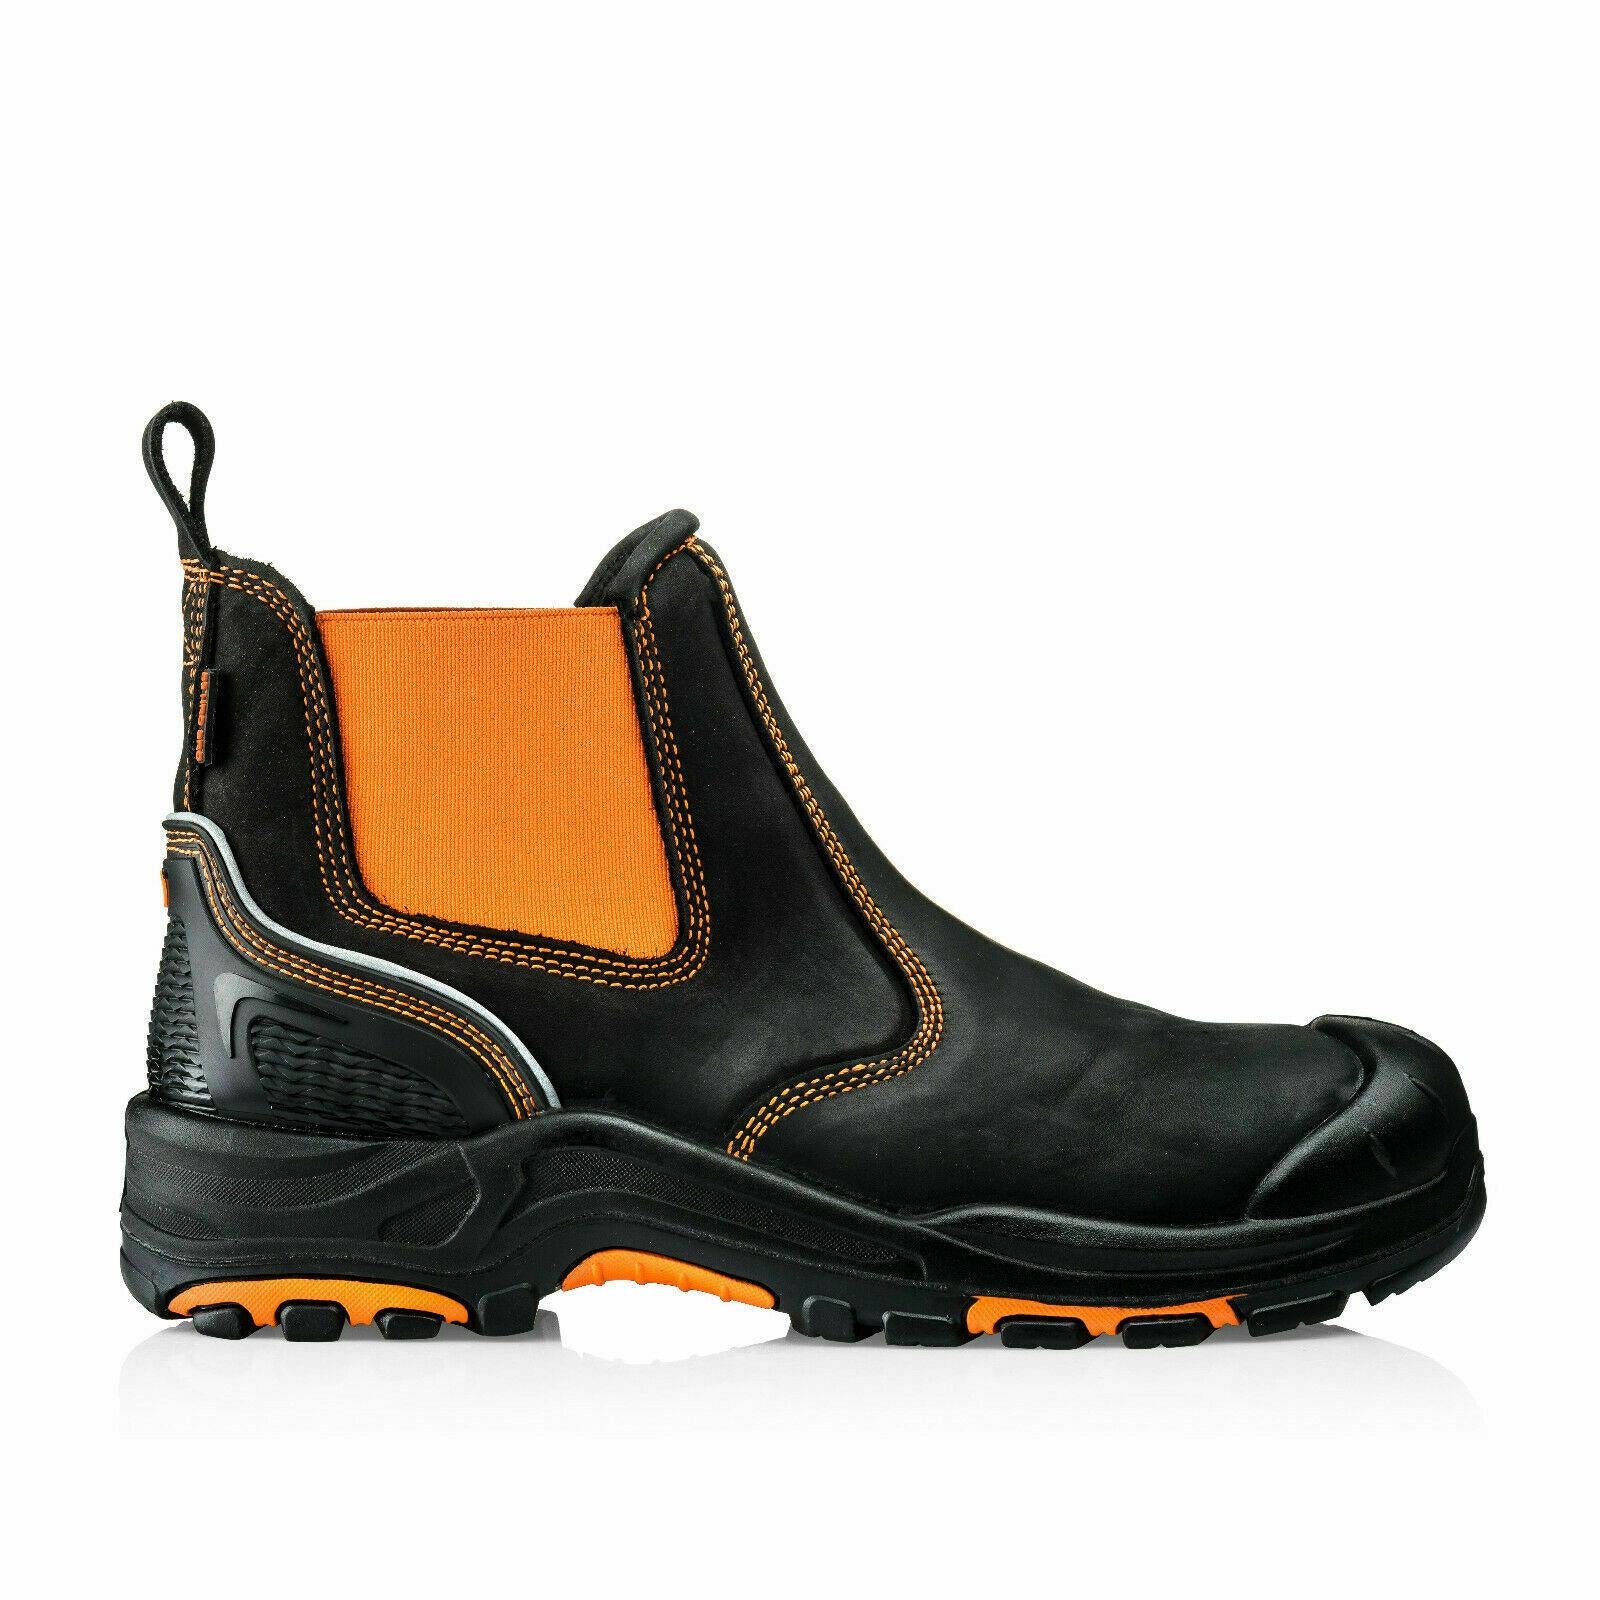 Buckbootz S3 black/orange composite toe/midsole safety dealer work boot #BVIZ3